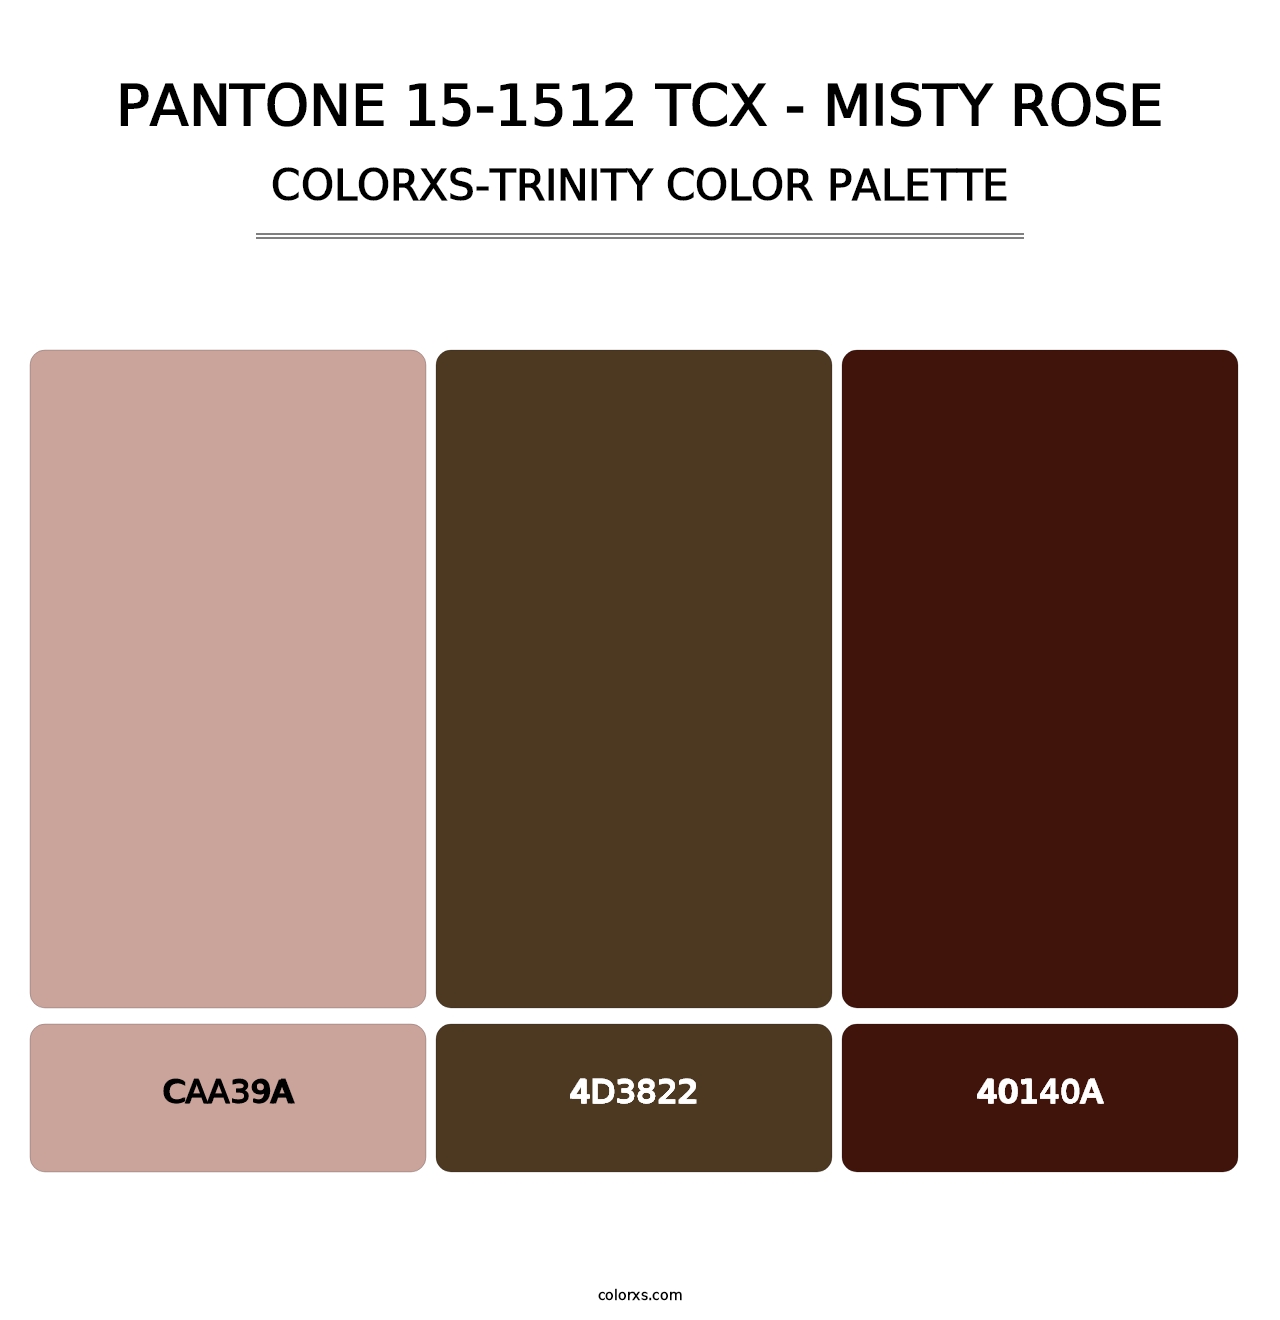 PANTONE 15-1512 TCX - Misty Rose - Colorxs Trinity Palette